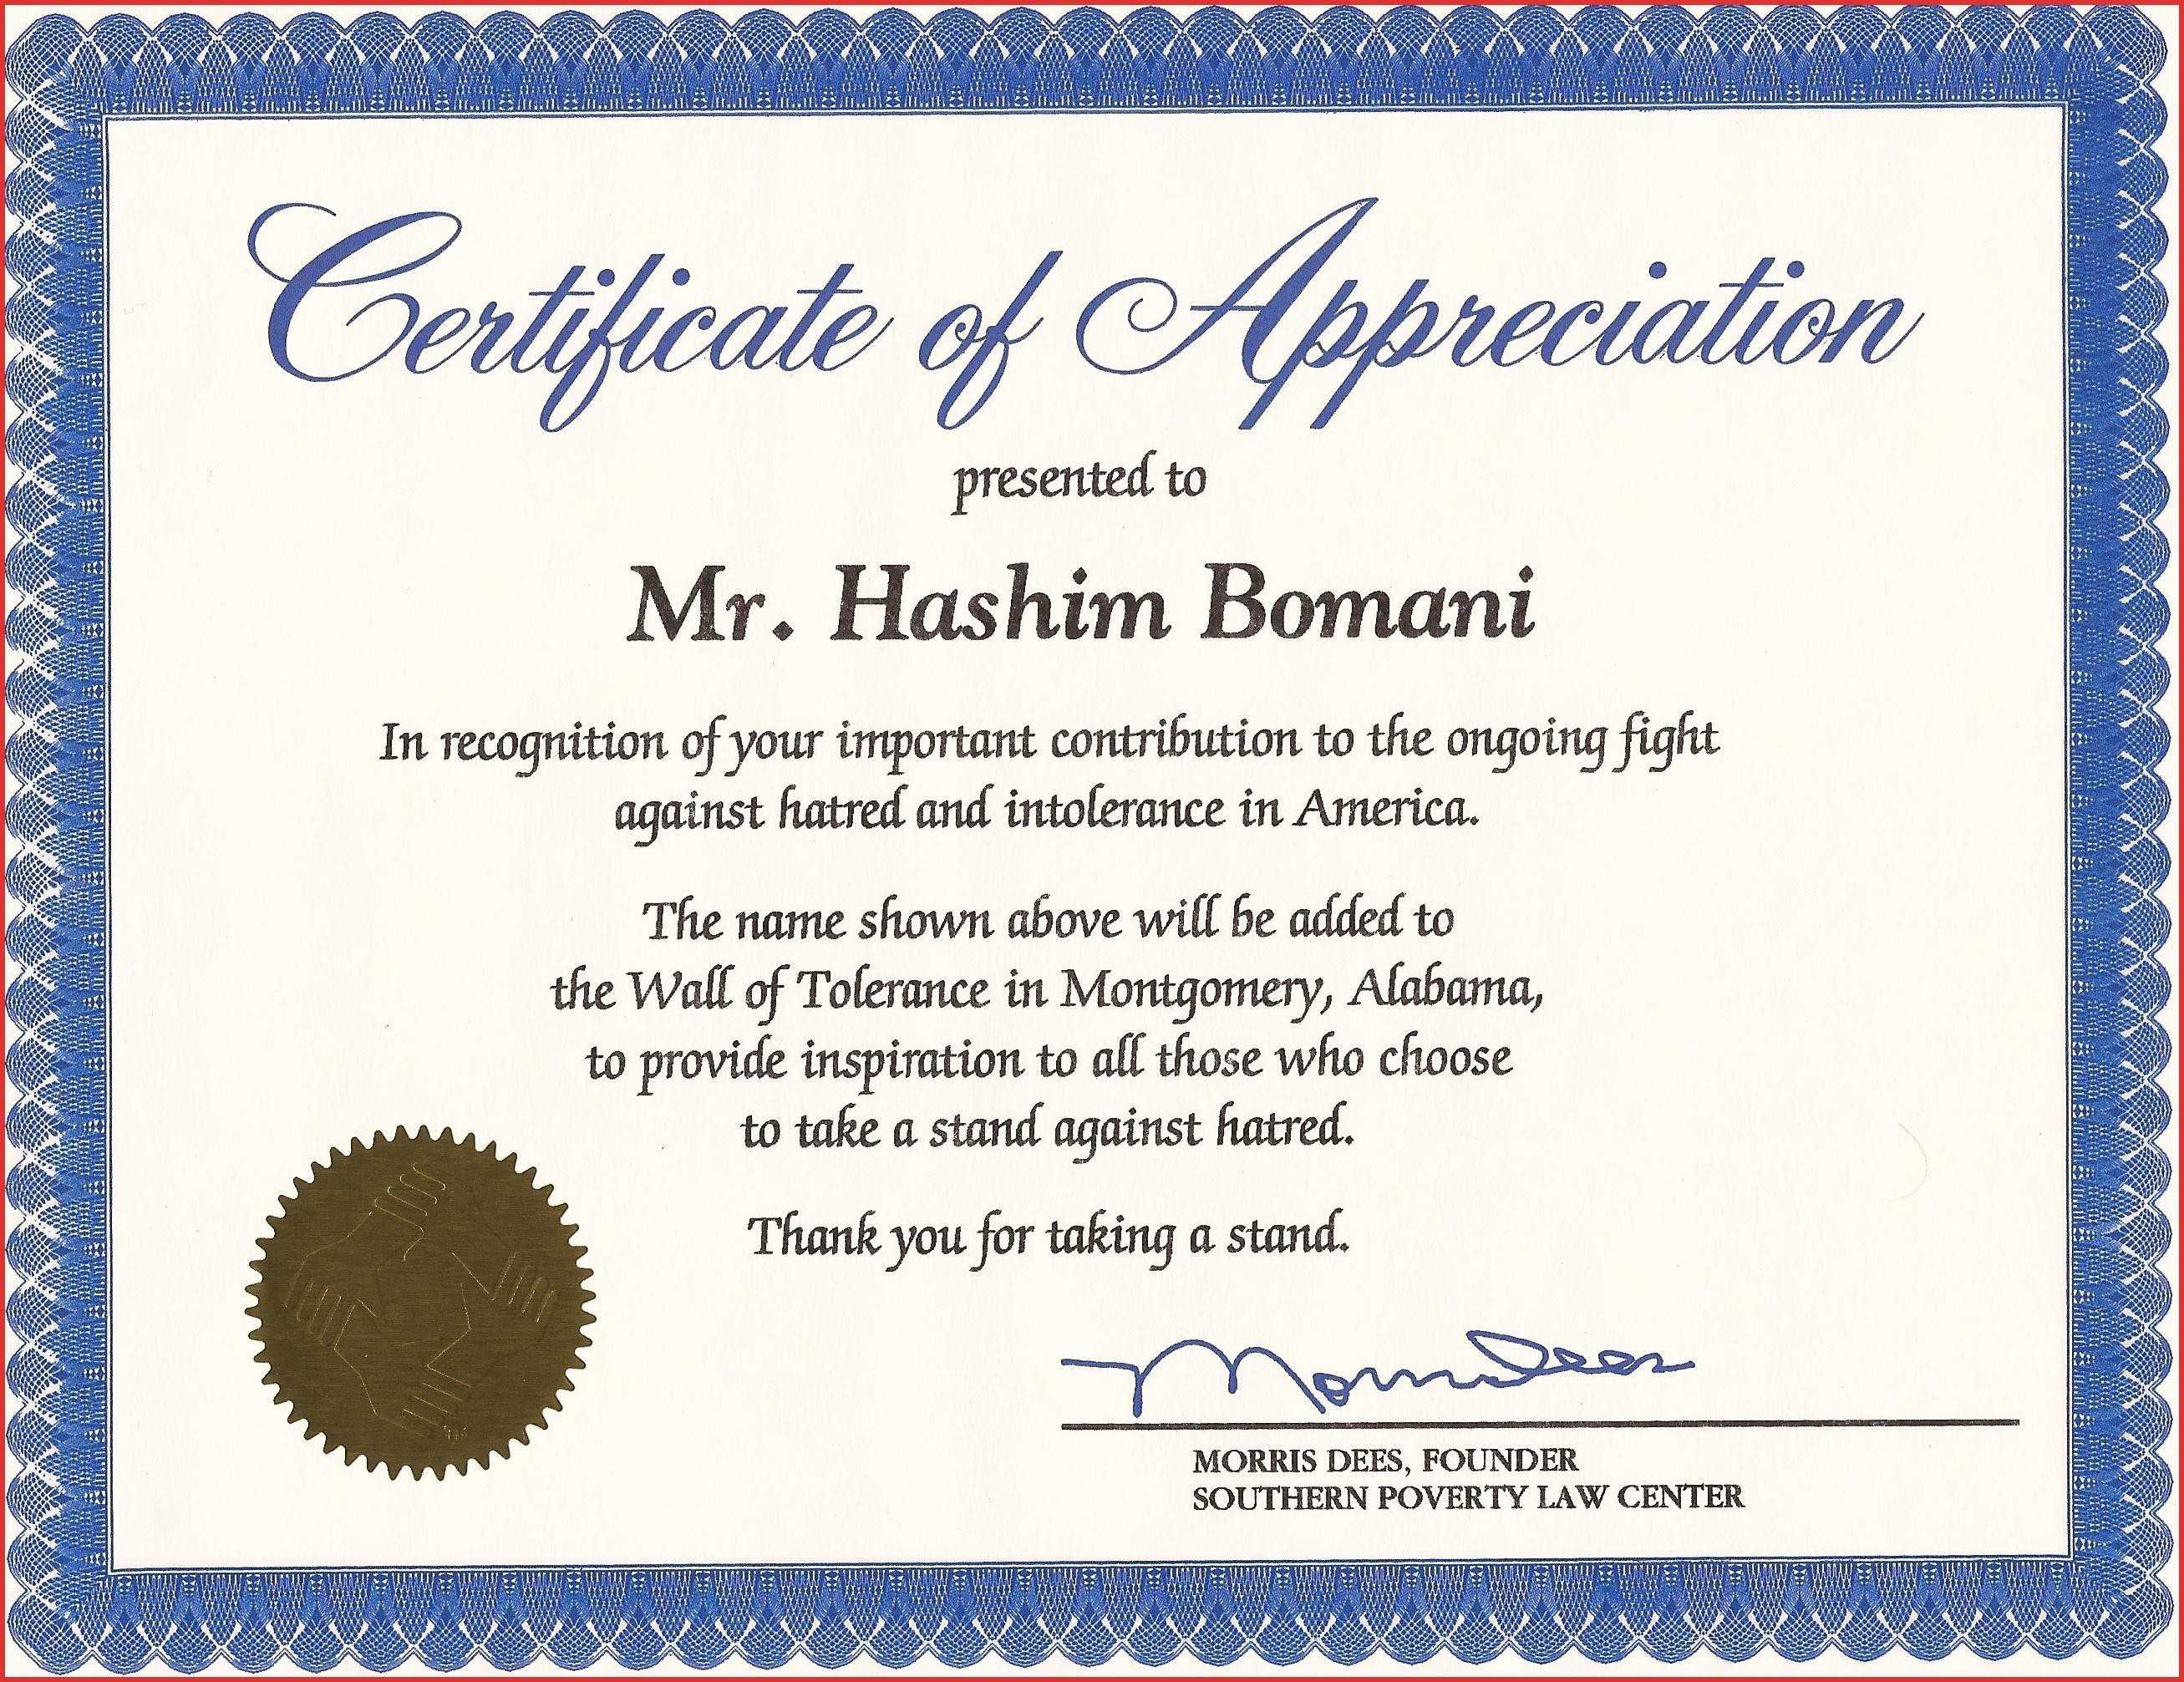 Certificates: Popular Certificate Of Appreciation Template For Certificates Of Appreciation Template